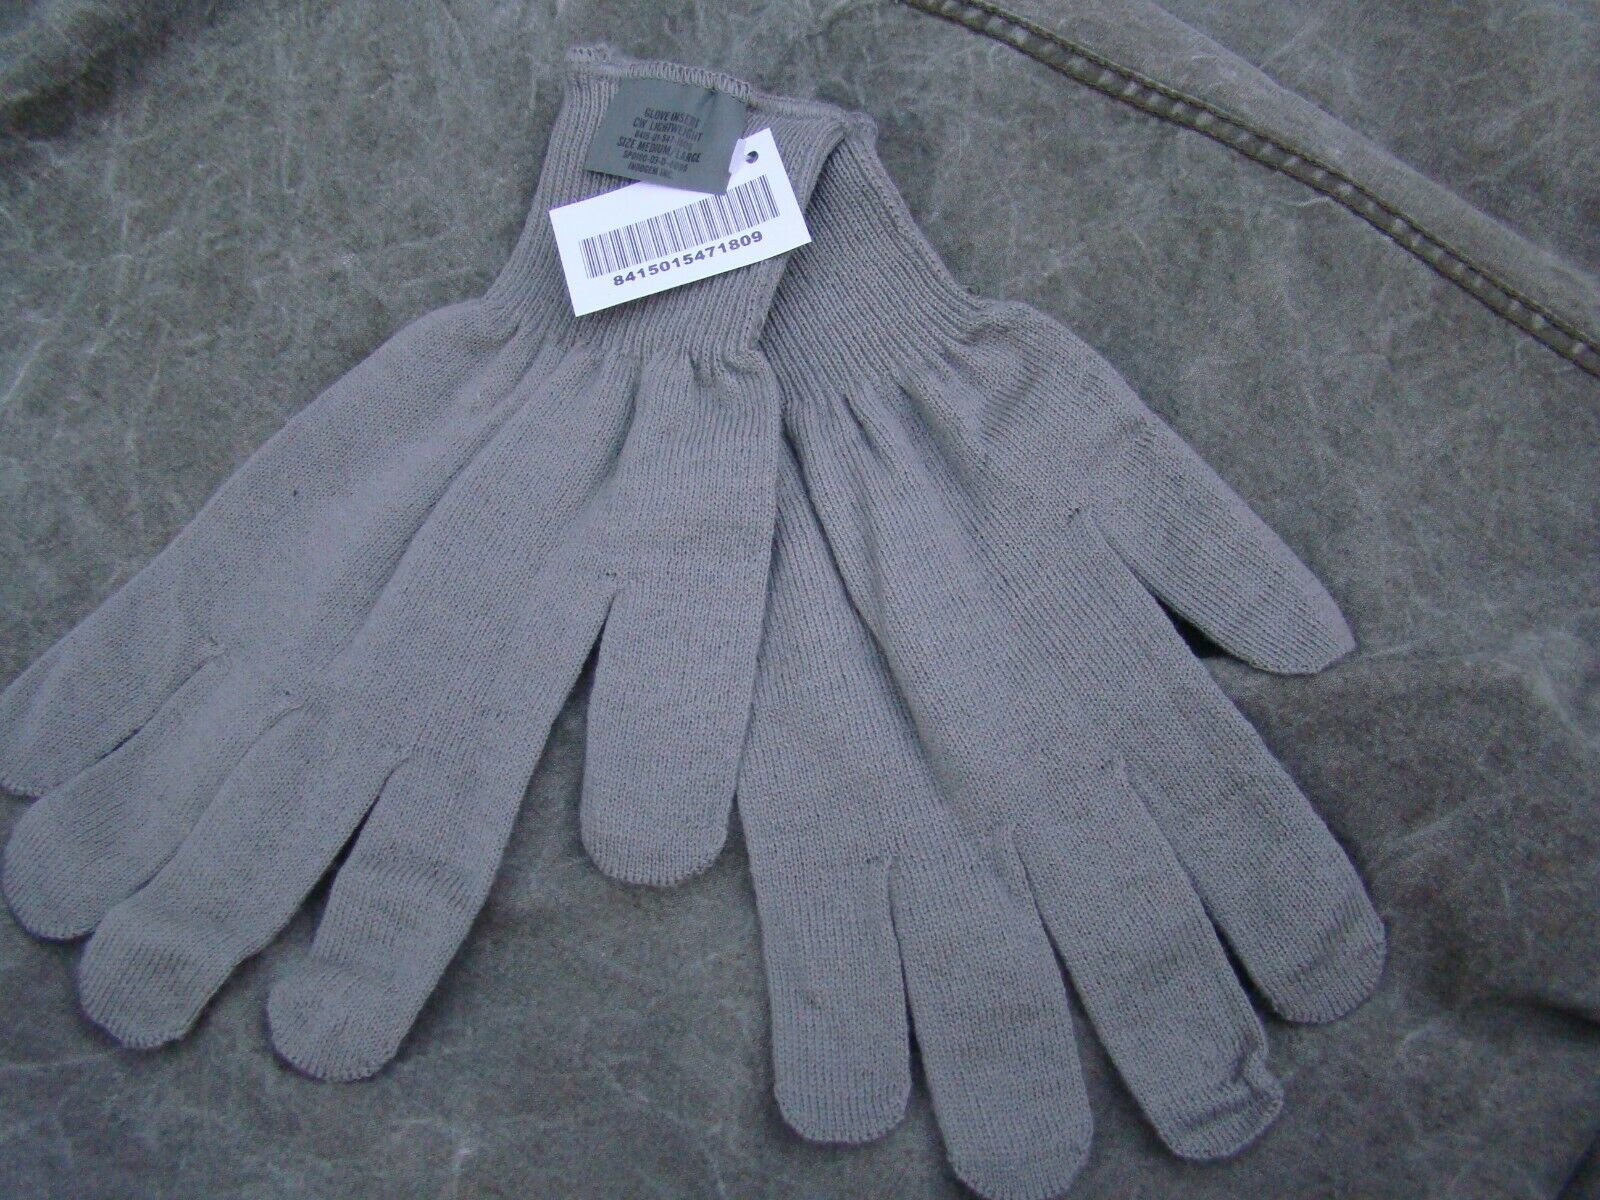 USGI Cold Weather Lightweight Glove Inserts size Medium / Large Grey - New